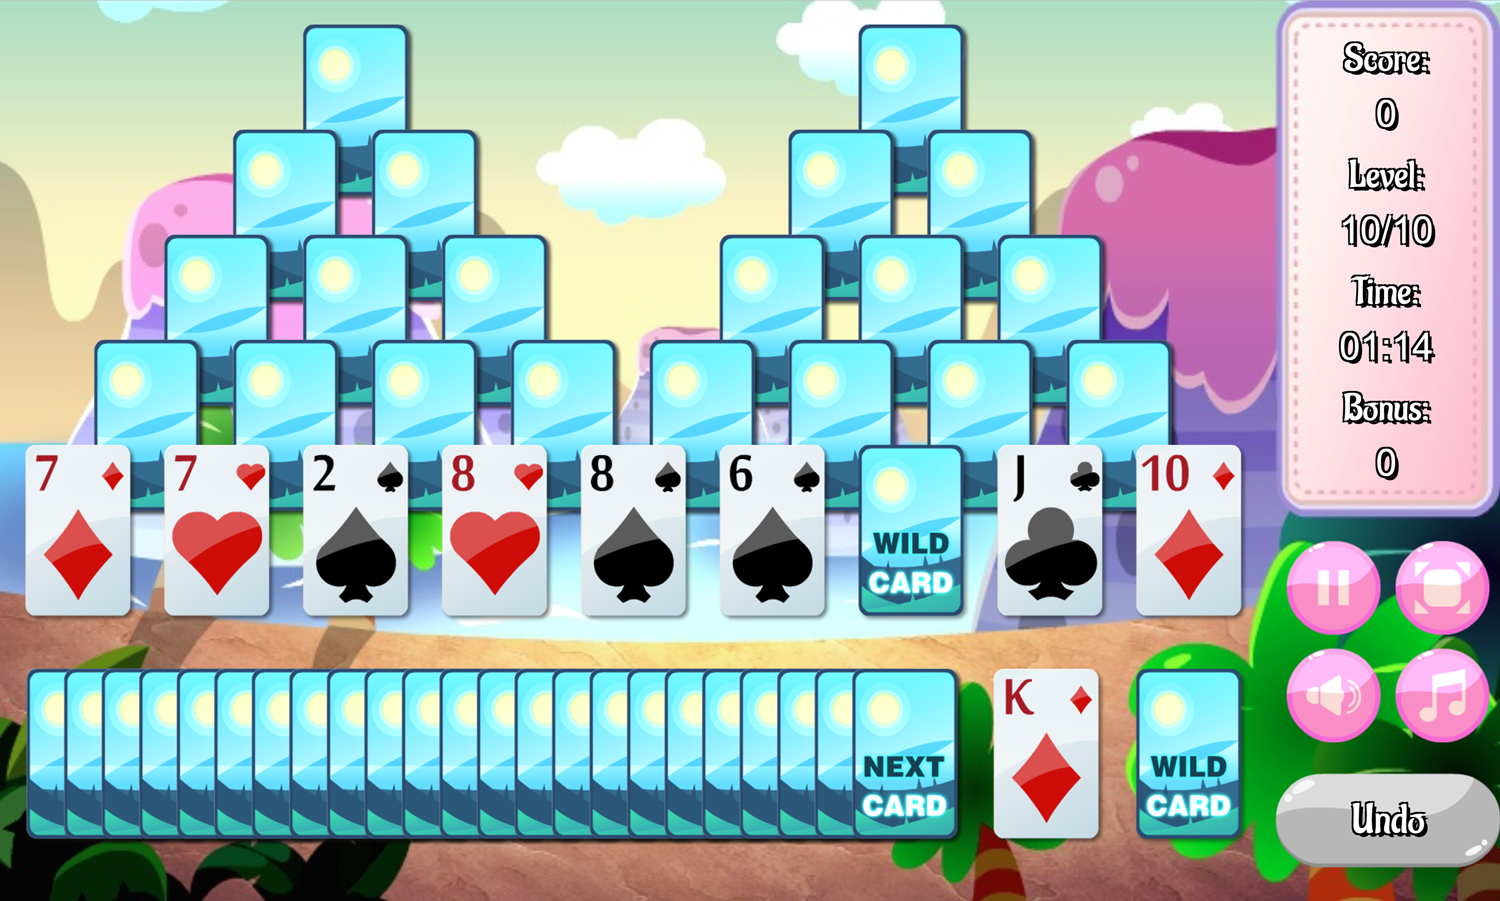 Mountain Solitaire Game Final Level Screen Screenshot.